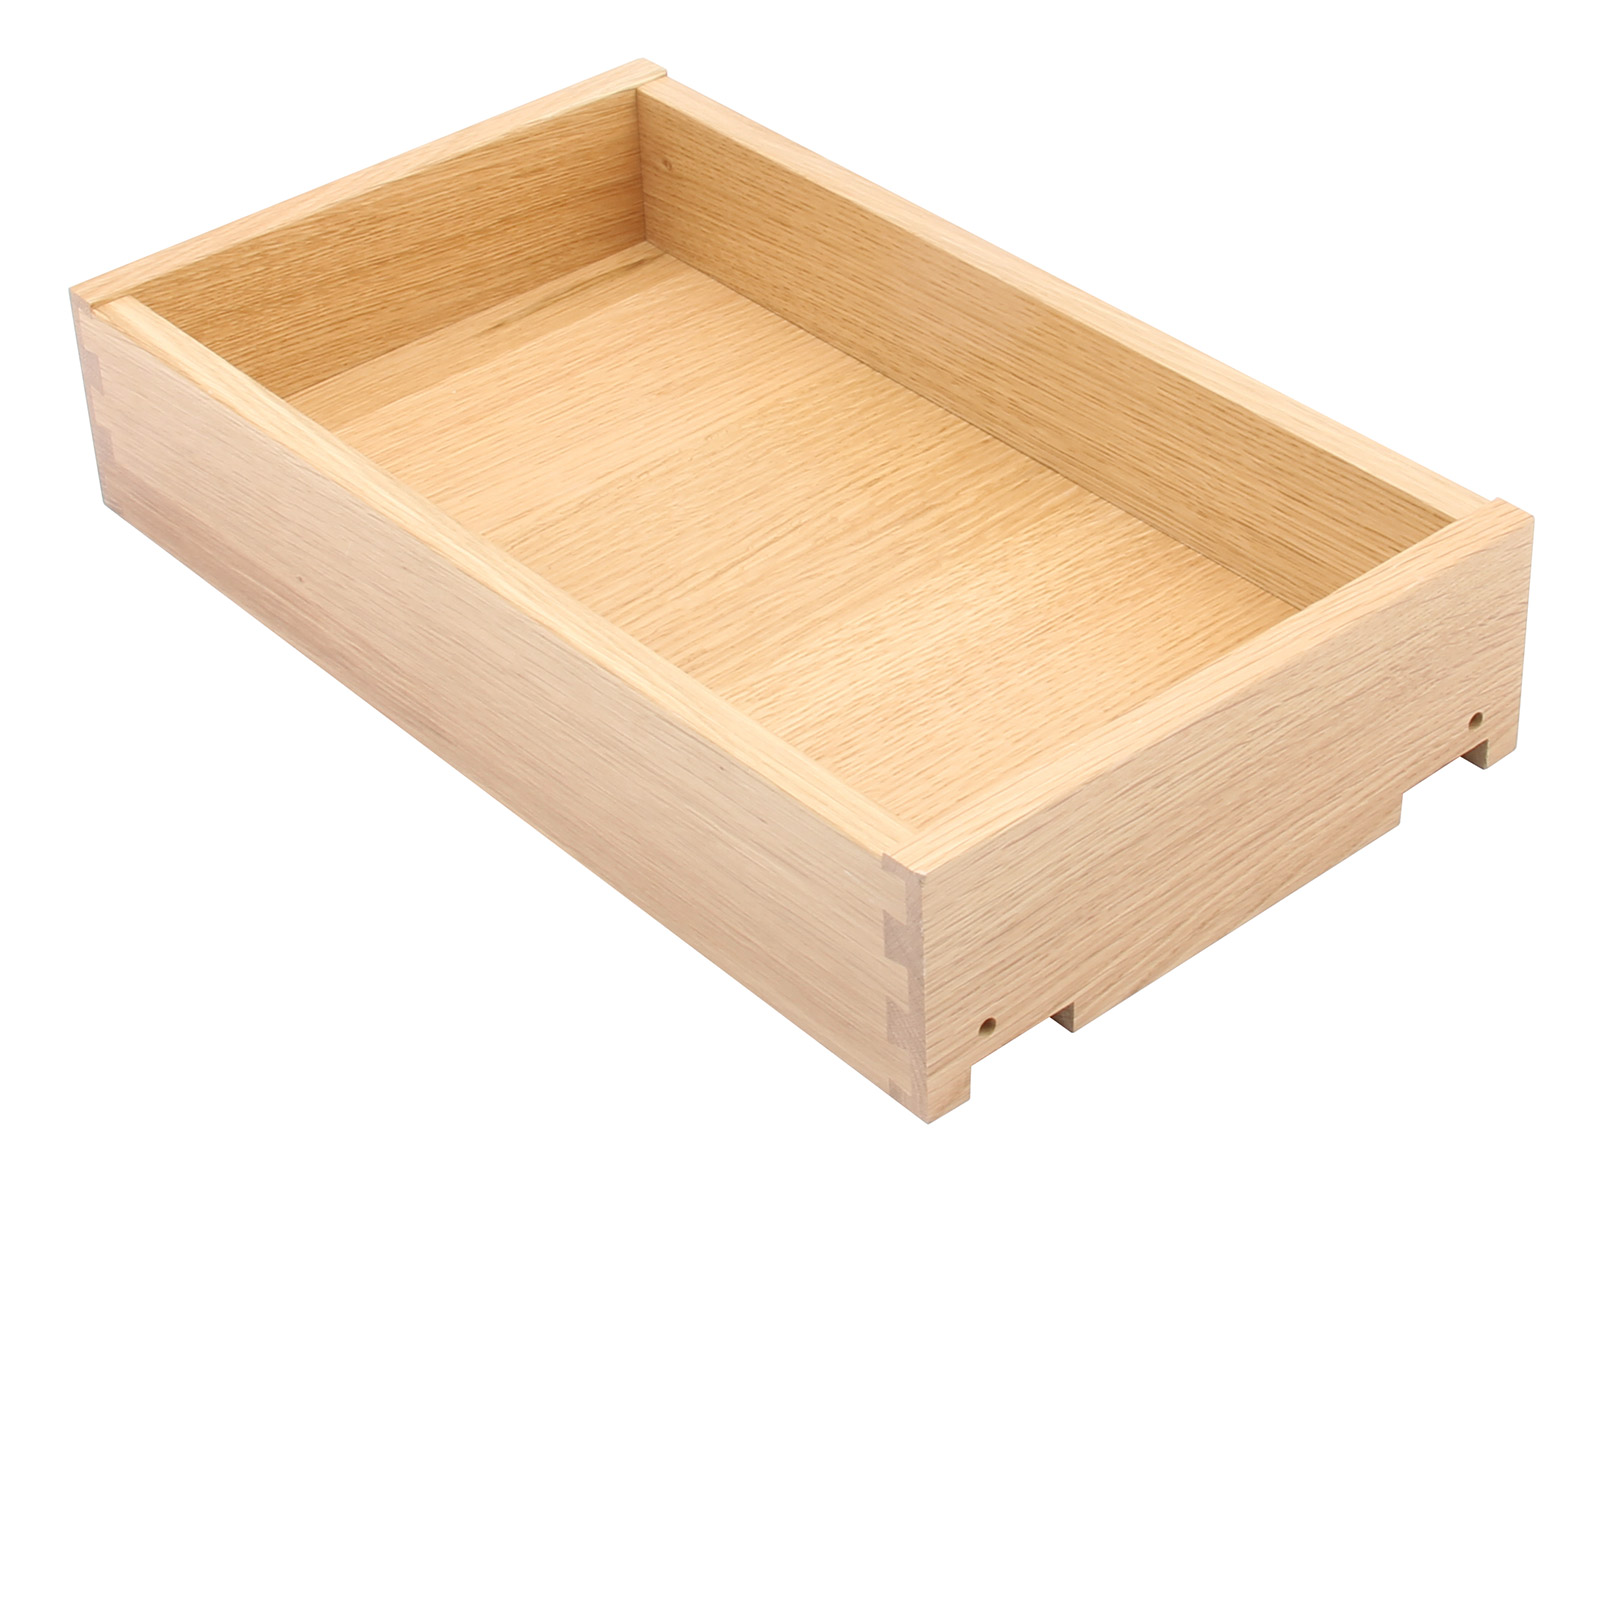 Standard timber drawers